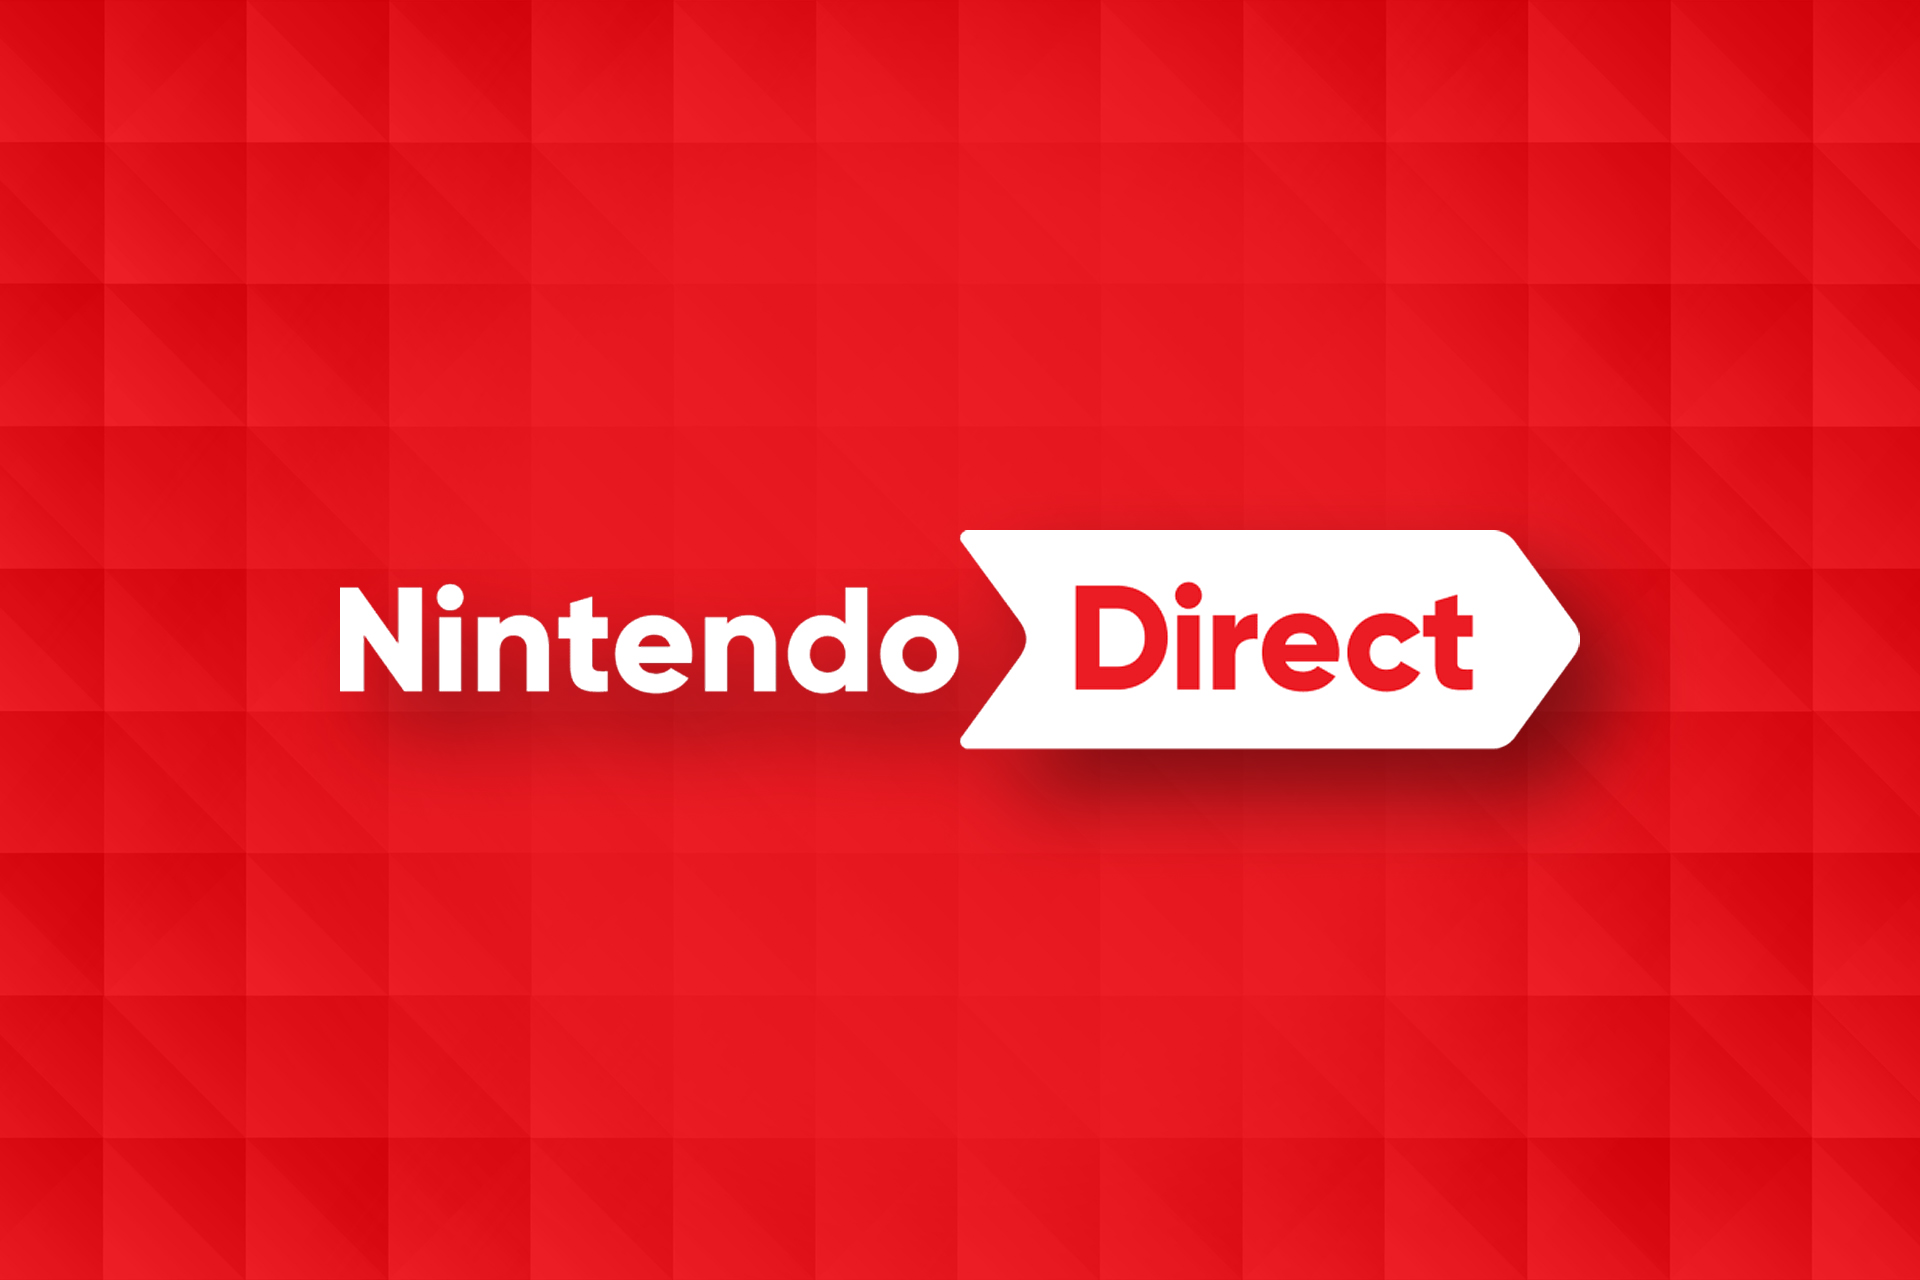 New Nintendo Direct coming on Feb. 21